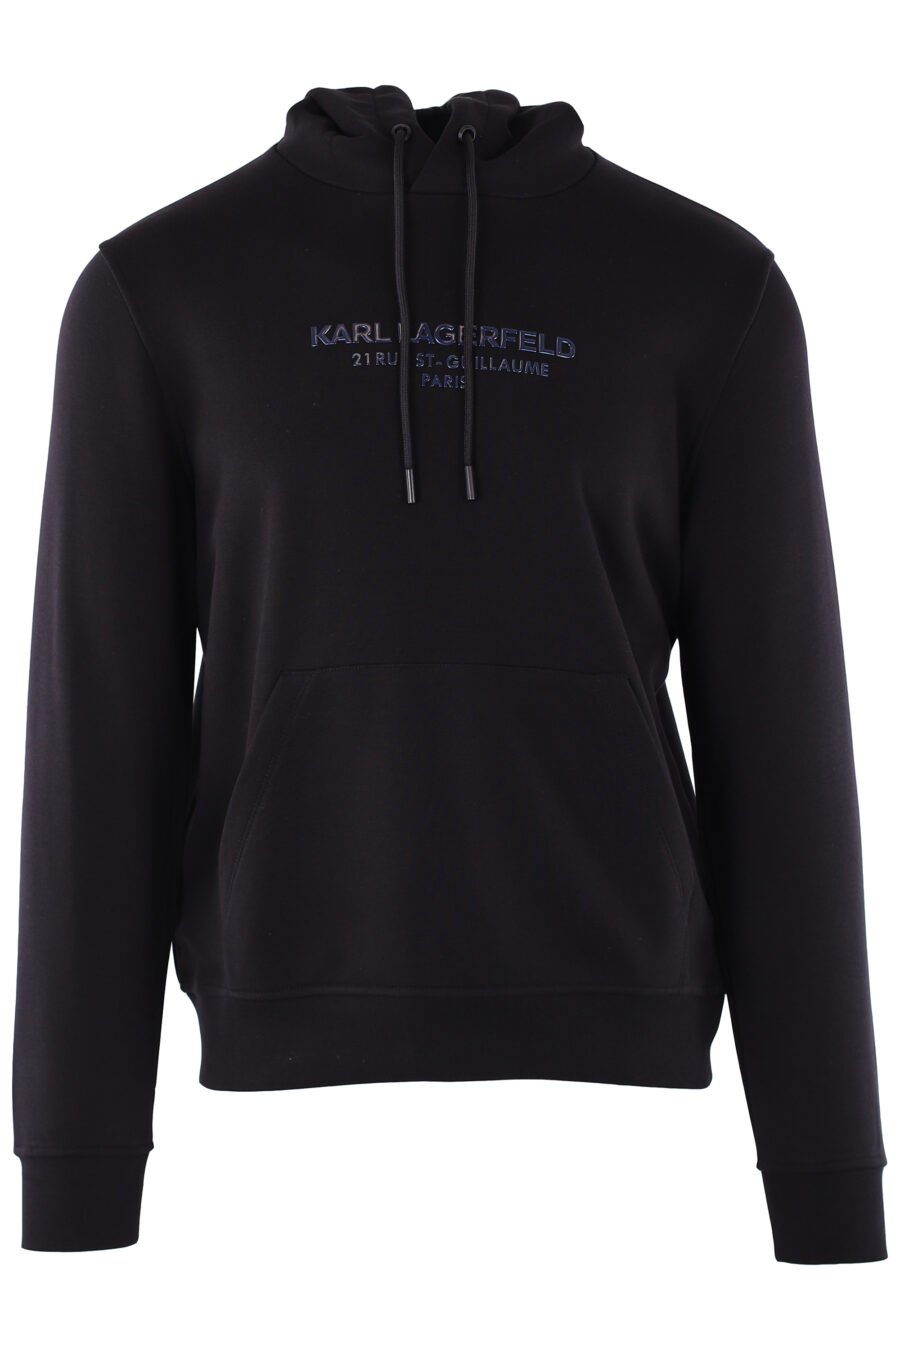 Black sweatshirt with hood and blue metallic logo "rue st guillaume paris" - IMG 6406